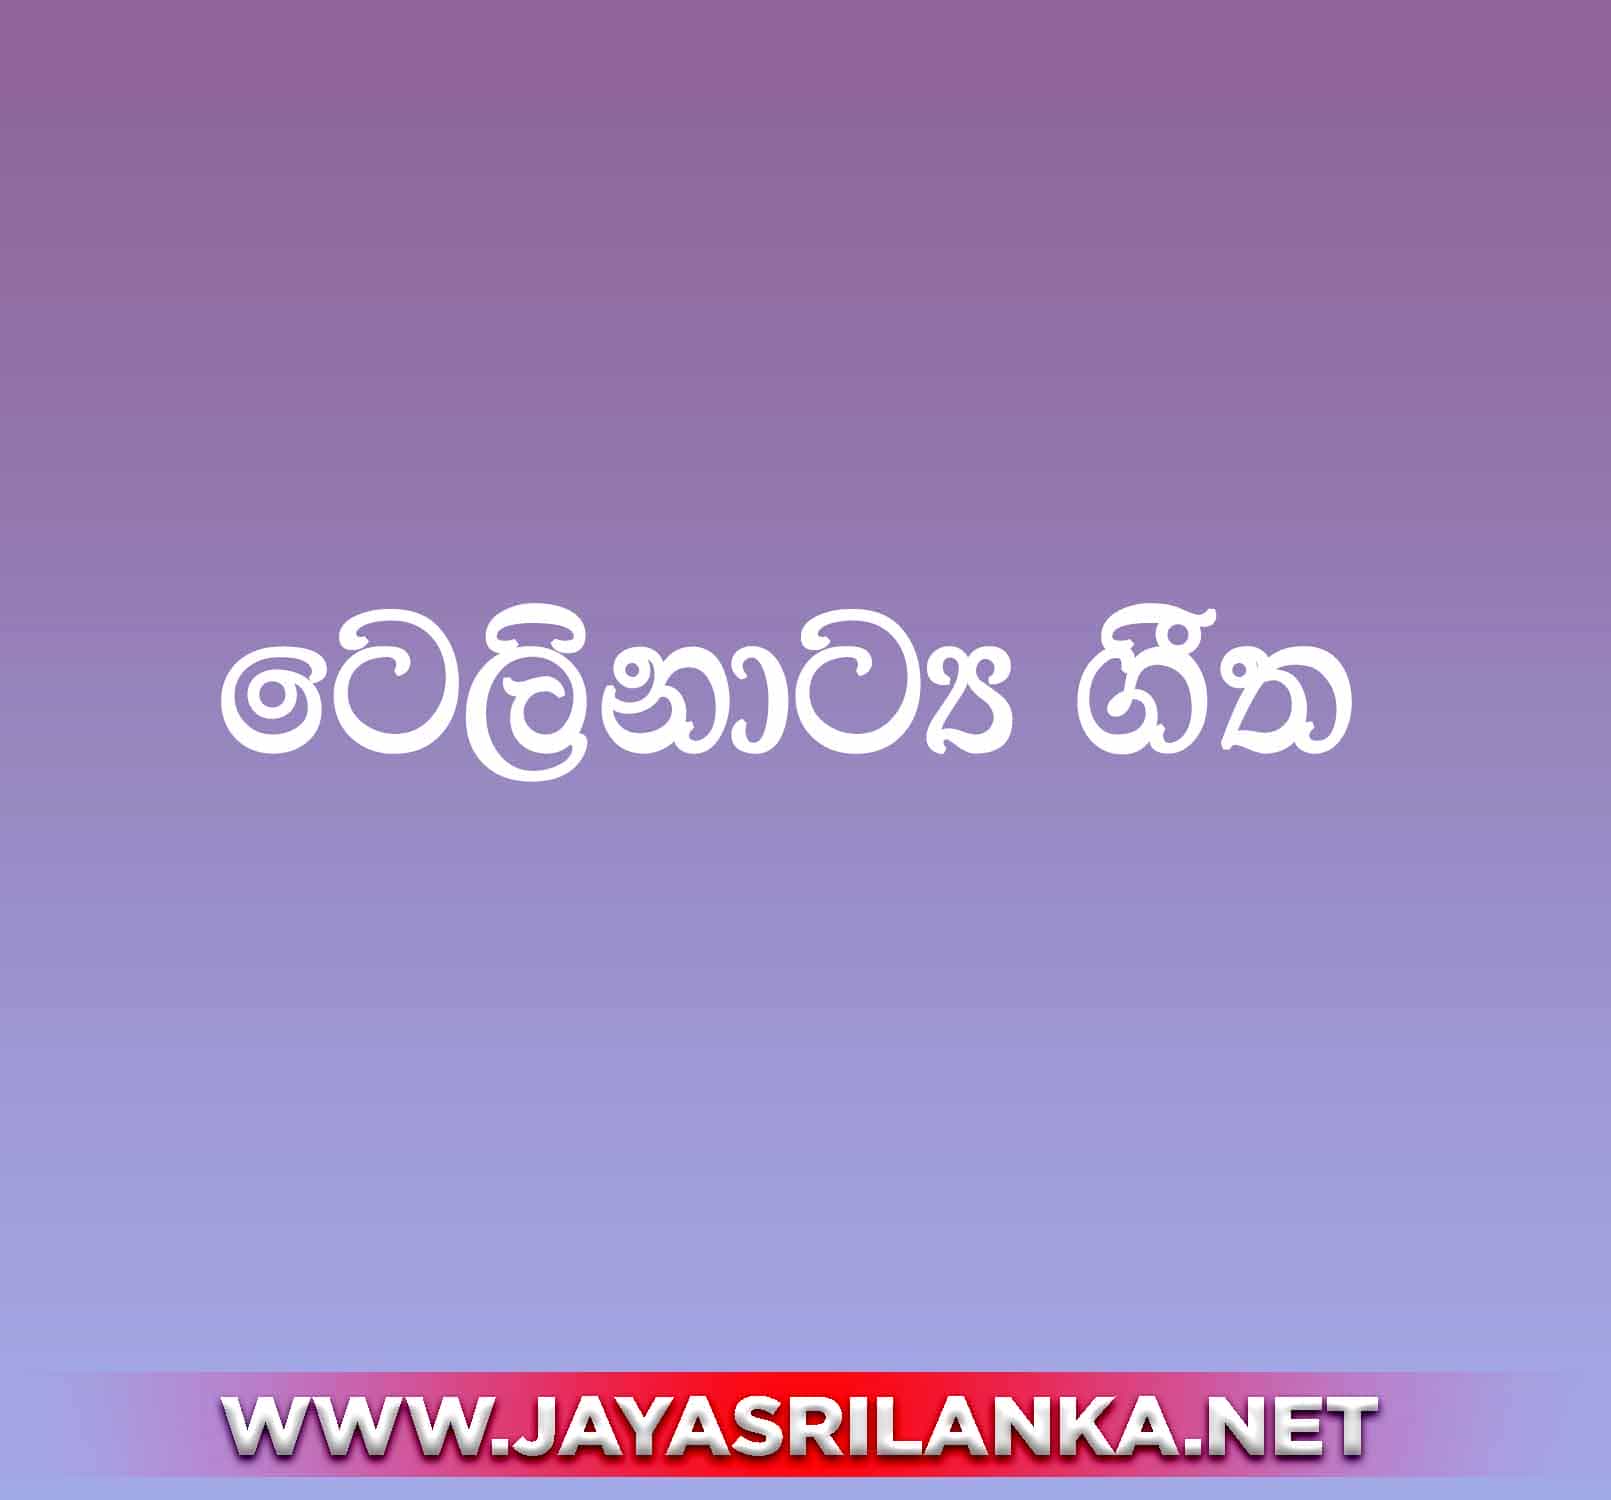 Dan Ithin Wena Kumak Karannada - Sinhala Teledrama Songs mp3 Image